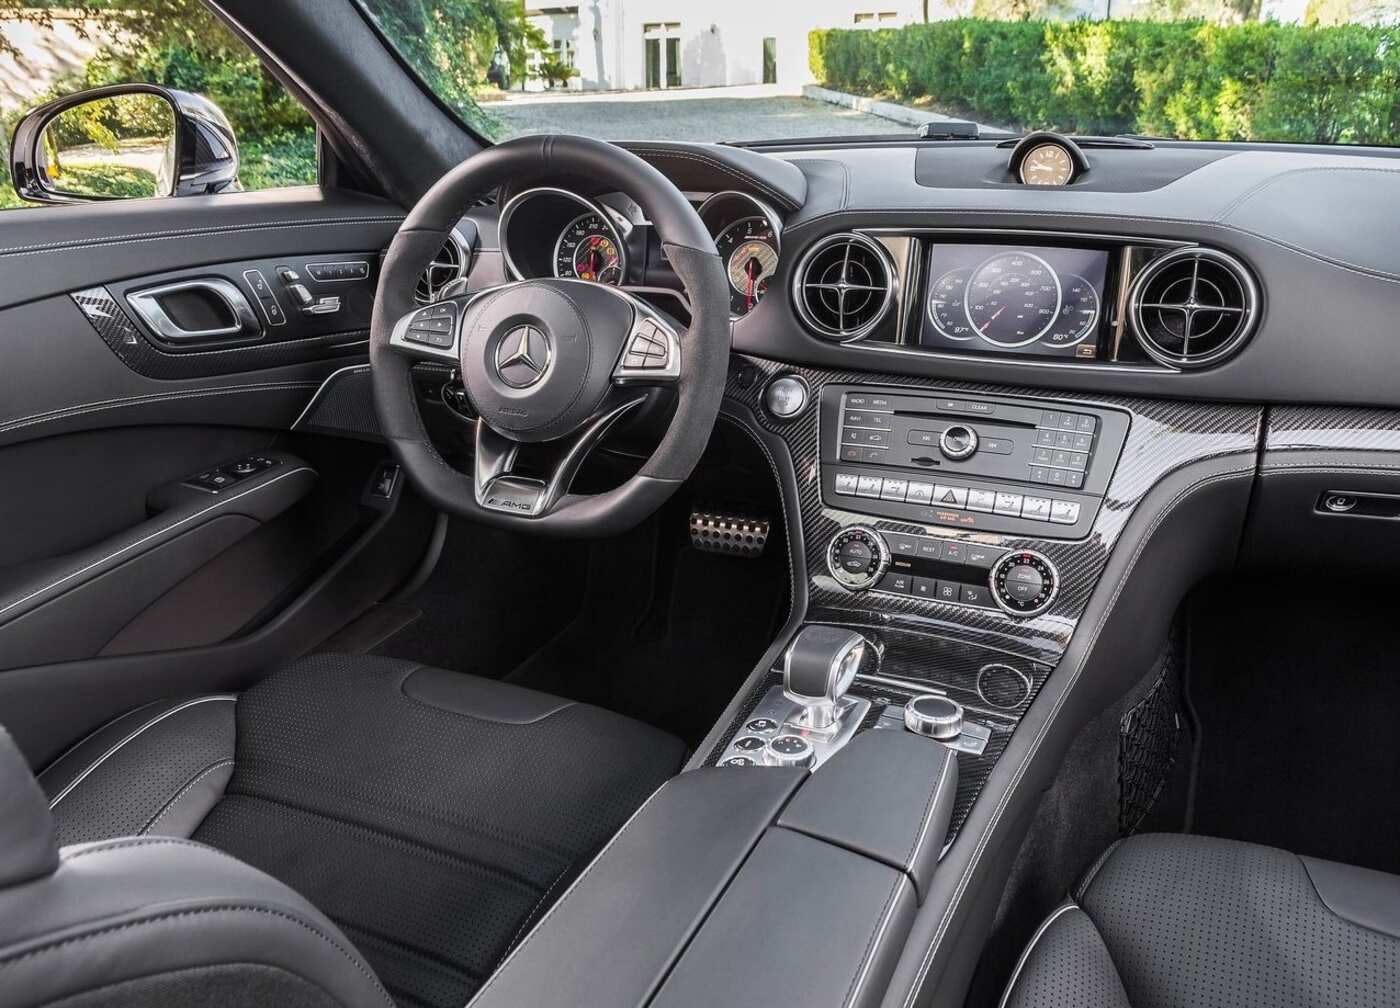 2019 Mercedes Benz Sl Comparisons Reviews Pictures Truecar